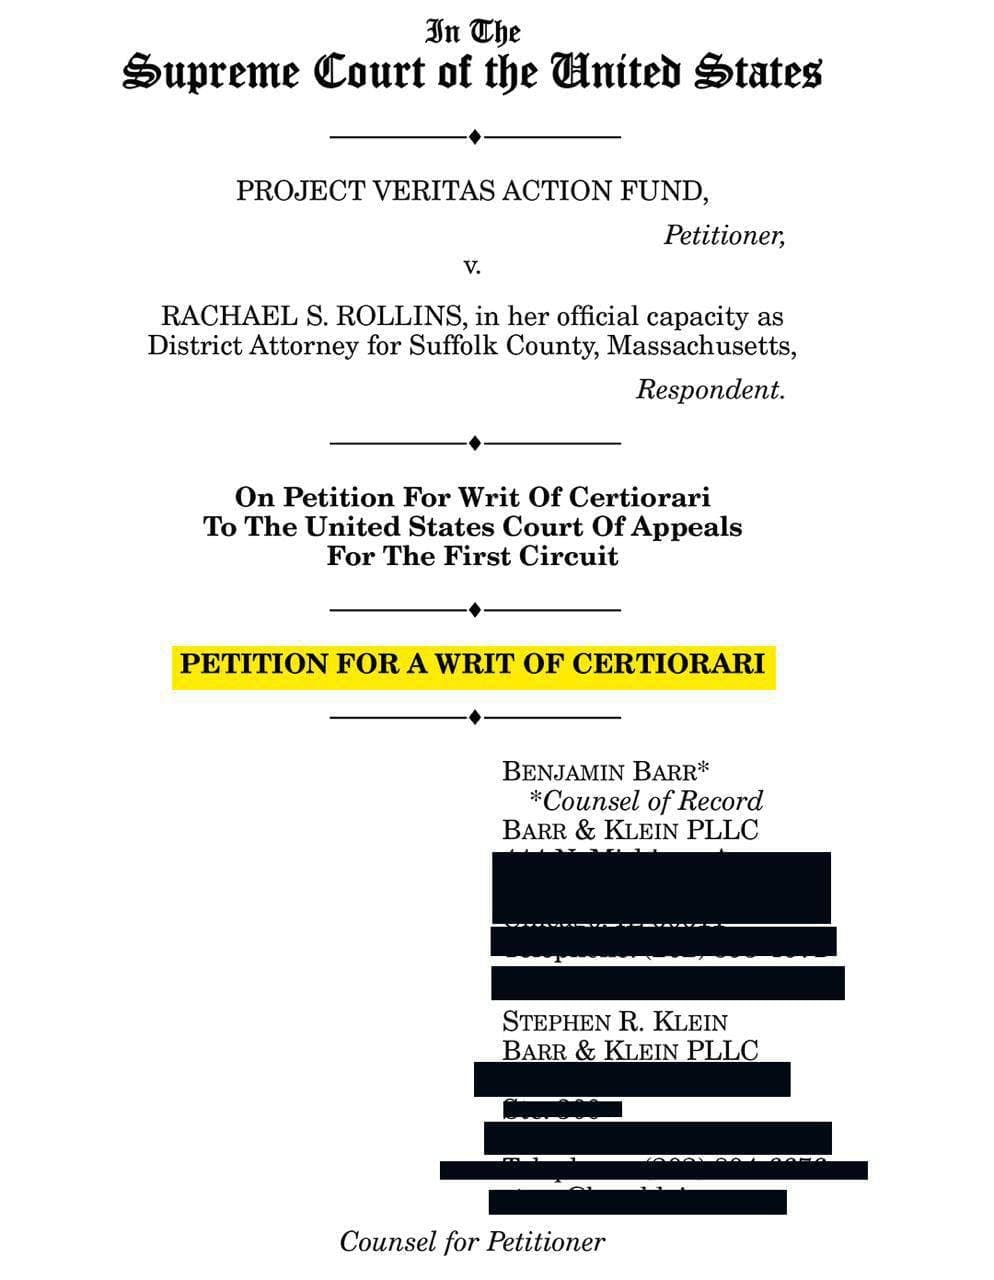 Petition for Writ of Certatori 